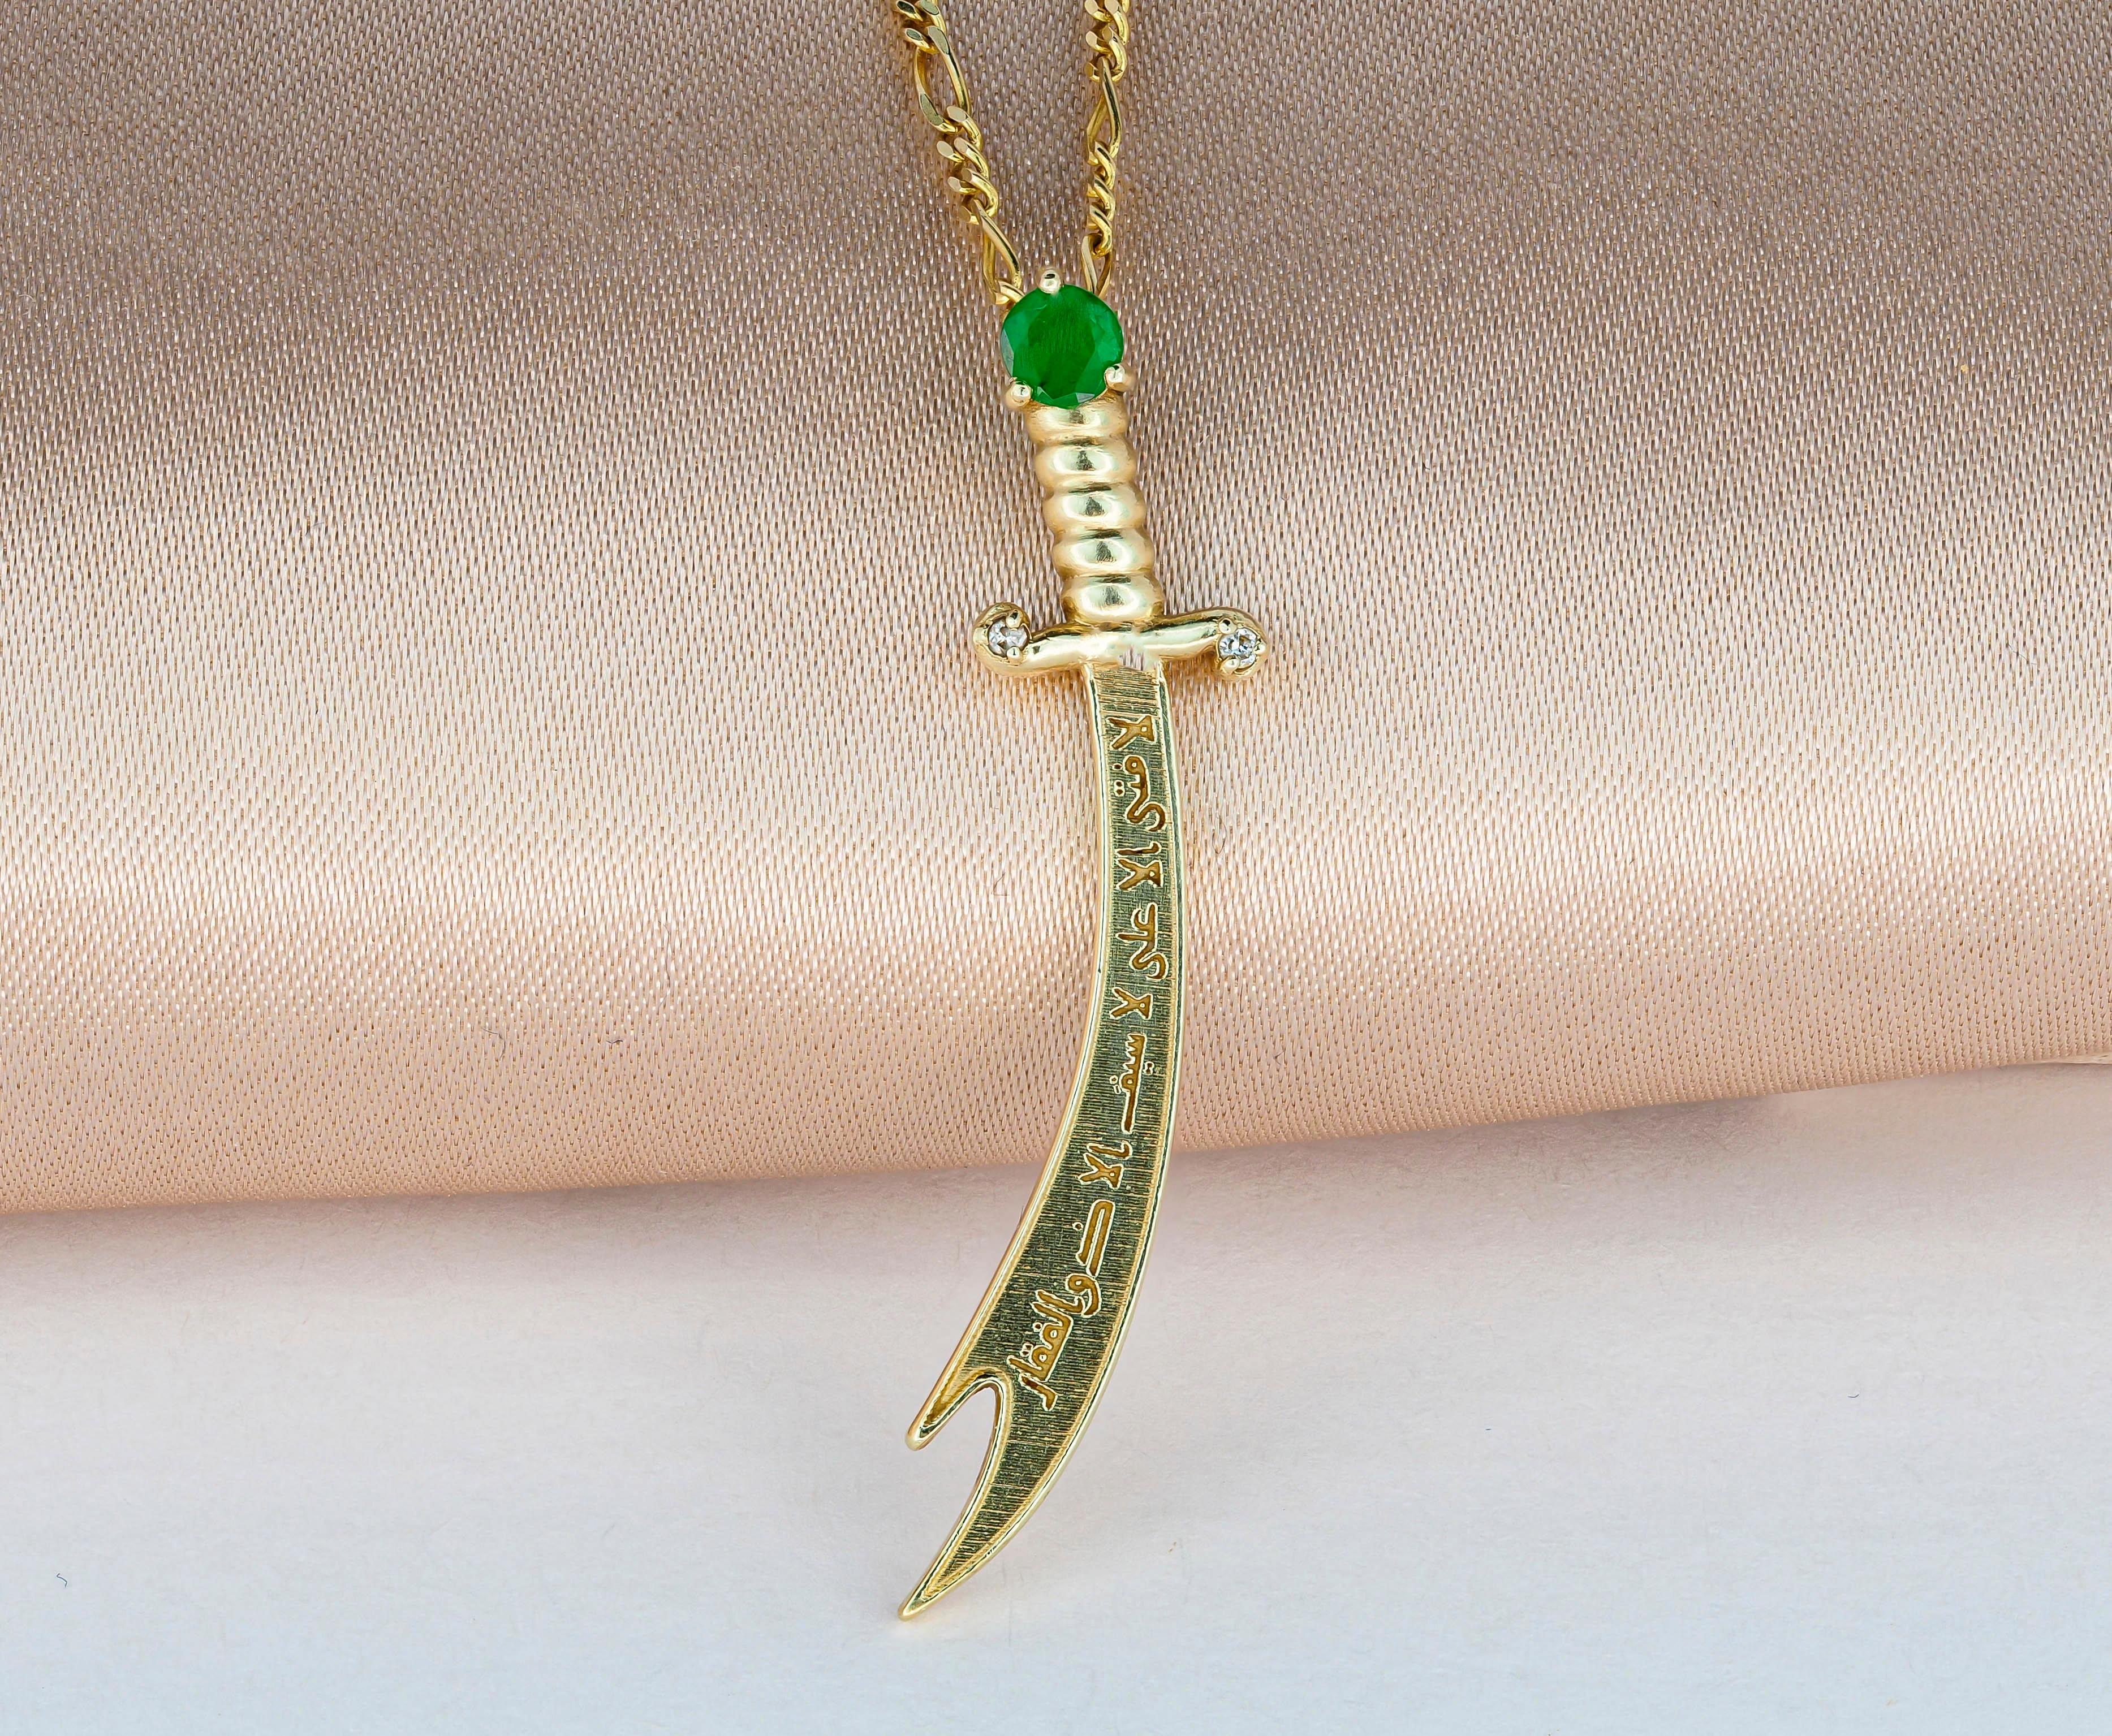 14K Gold Zulfikar sword pendant with emerald, diamonds. 
Shia Islamic Hazrat Imam Ali ibn Abi Talib علي Zulfiqar Sword. Emerald gold pendant.

Metal: 14k gold.
35x7.5 mm size.
Weight 1.70 gr.

Gemstones:
Emerald: round cut, green color, transparent